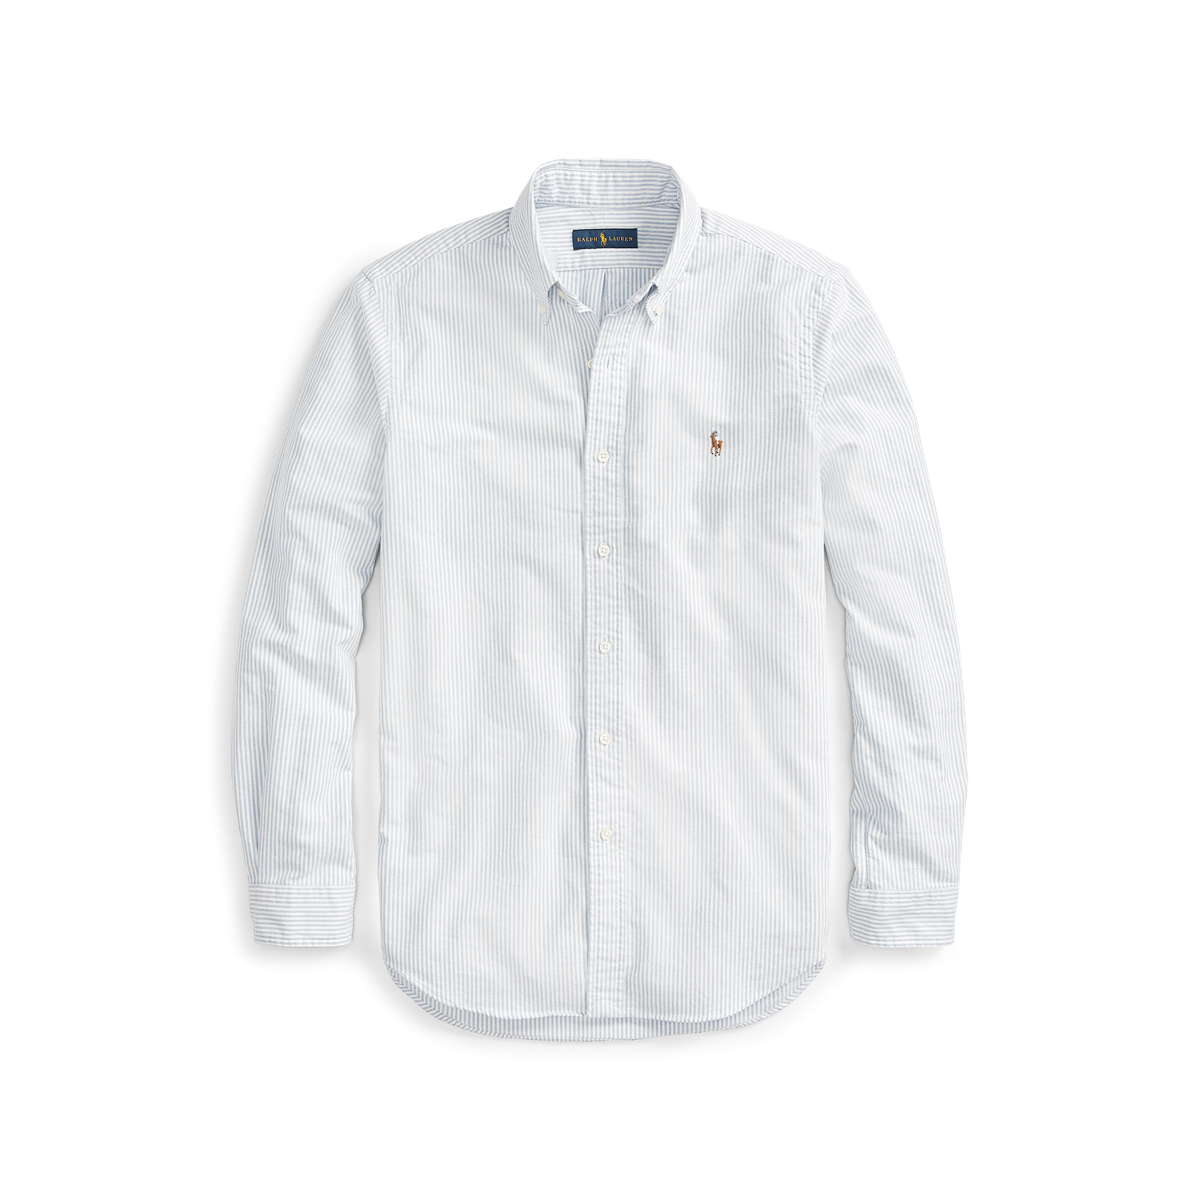 Polo Ralph Lauren - Classic Fit Striped Oxford Shirt S / Blue/White Stripe